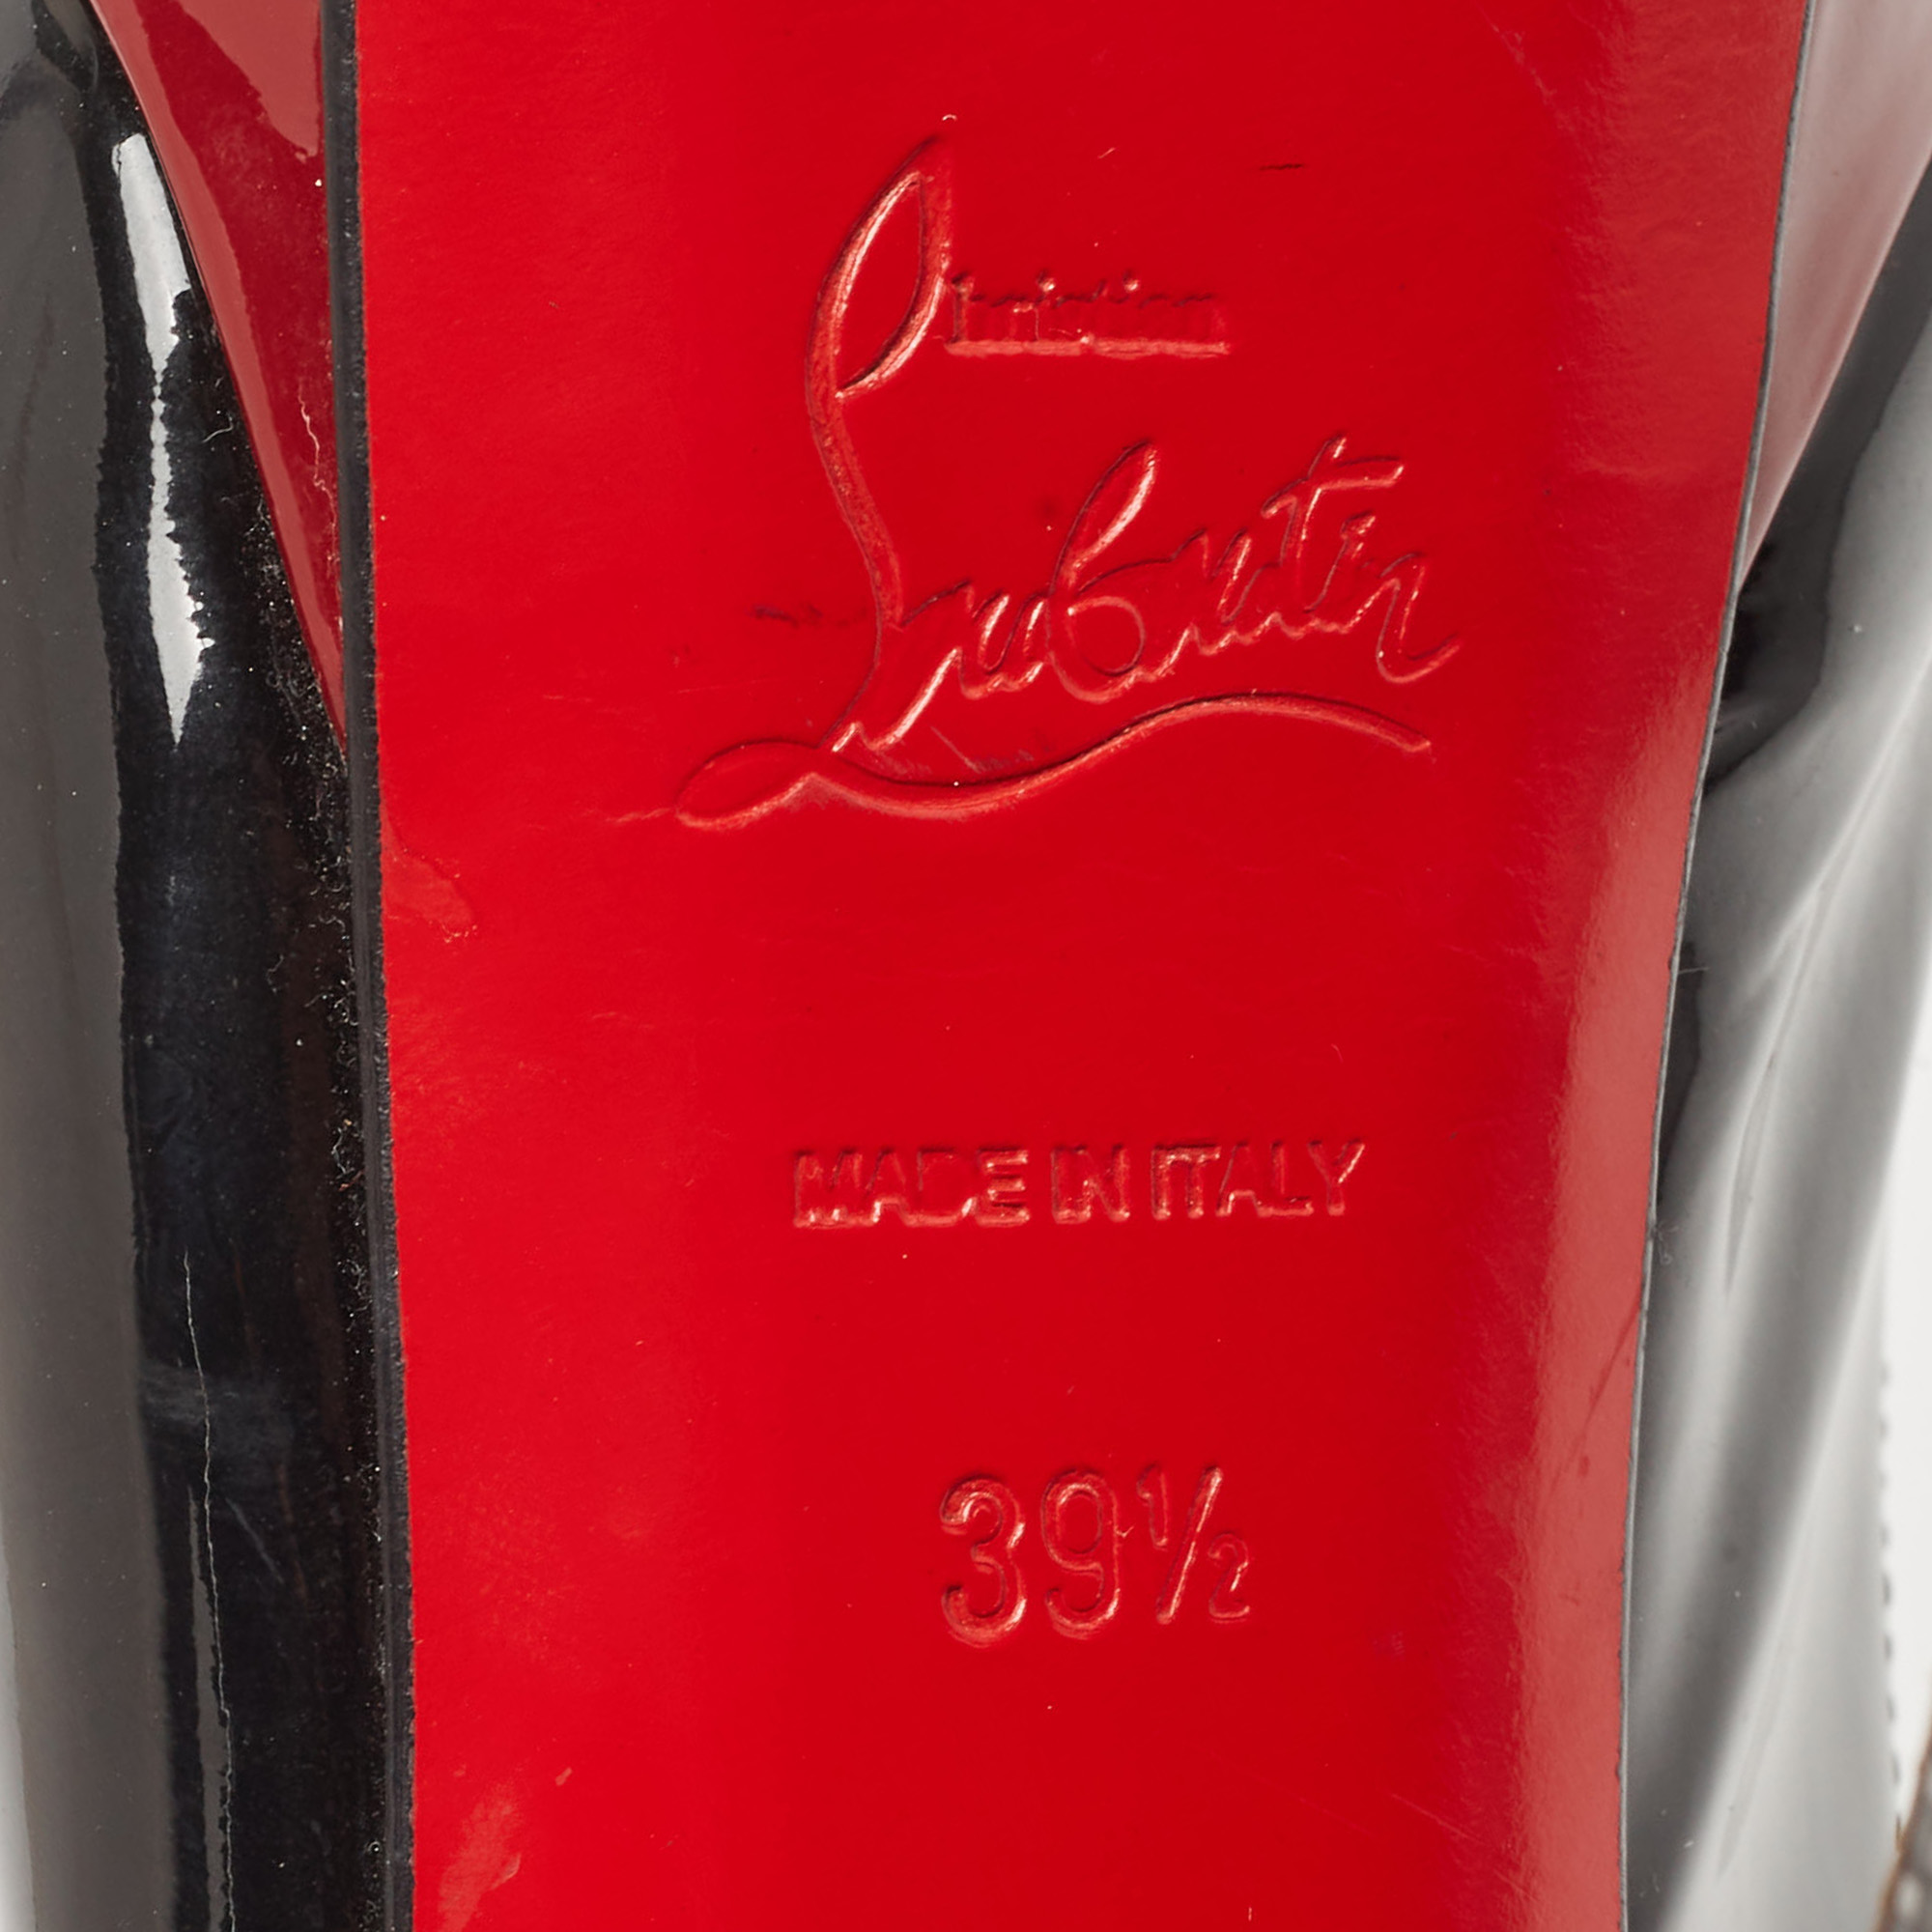 Christian Louboutin Black Patent Lady Peep Slingback Sandals Size 39.5